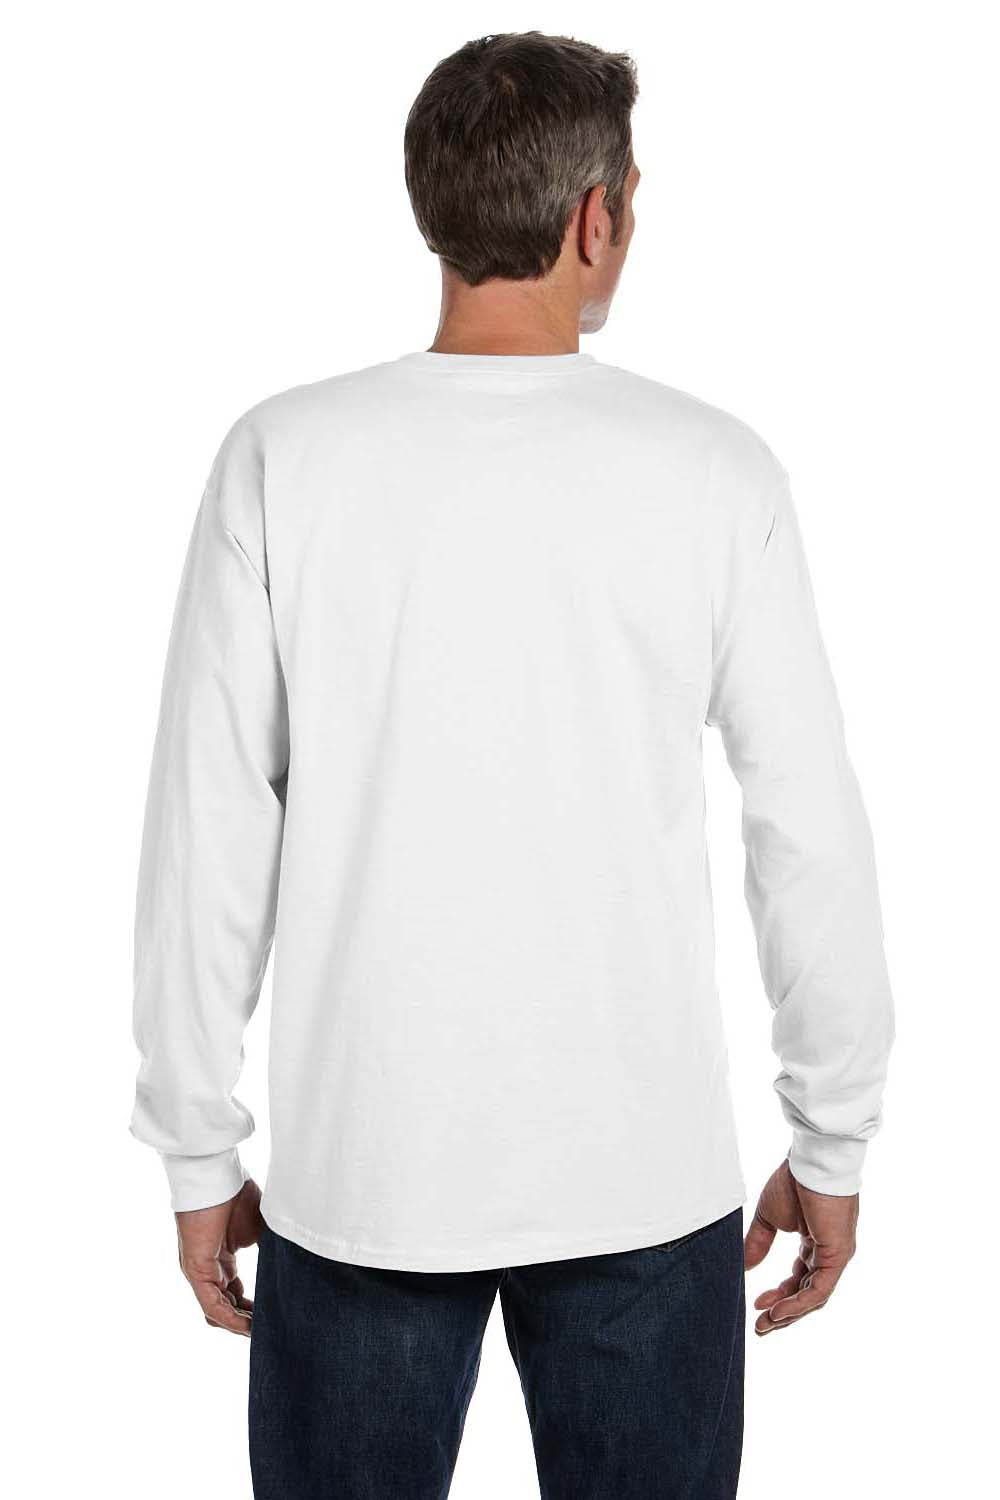 Hanes 5596 Mens ComfortSoft Long Sleeve Crewneck T-Shirt w/ Pocket White Back